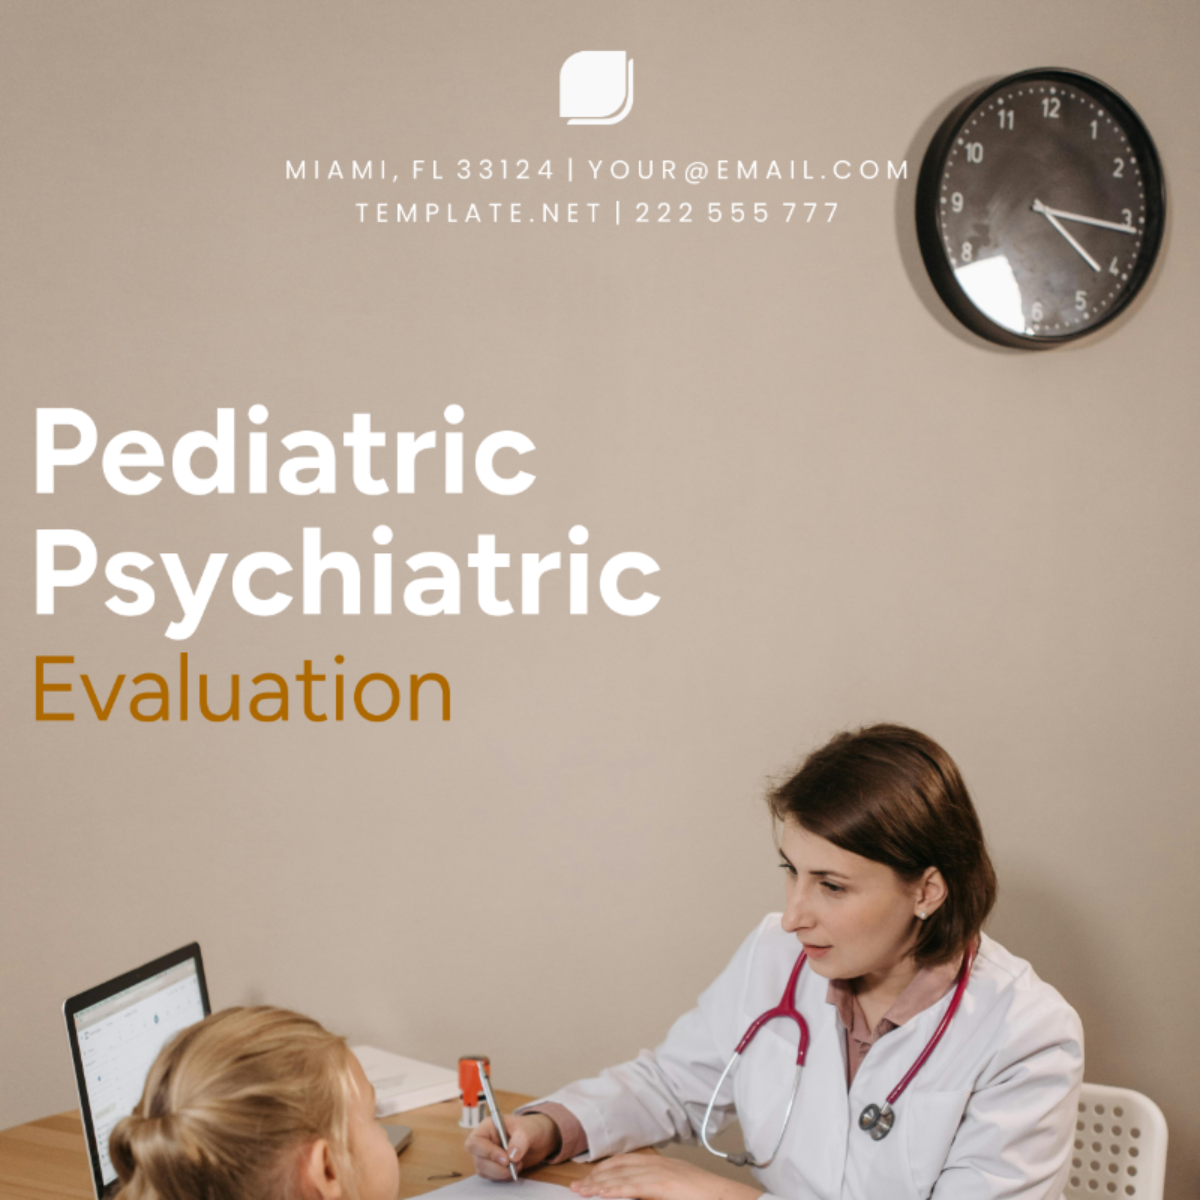 Pediatric Psychiatric Evaluation Template